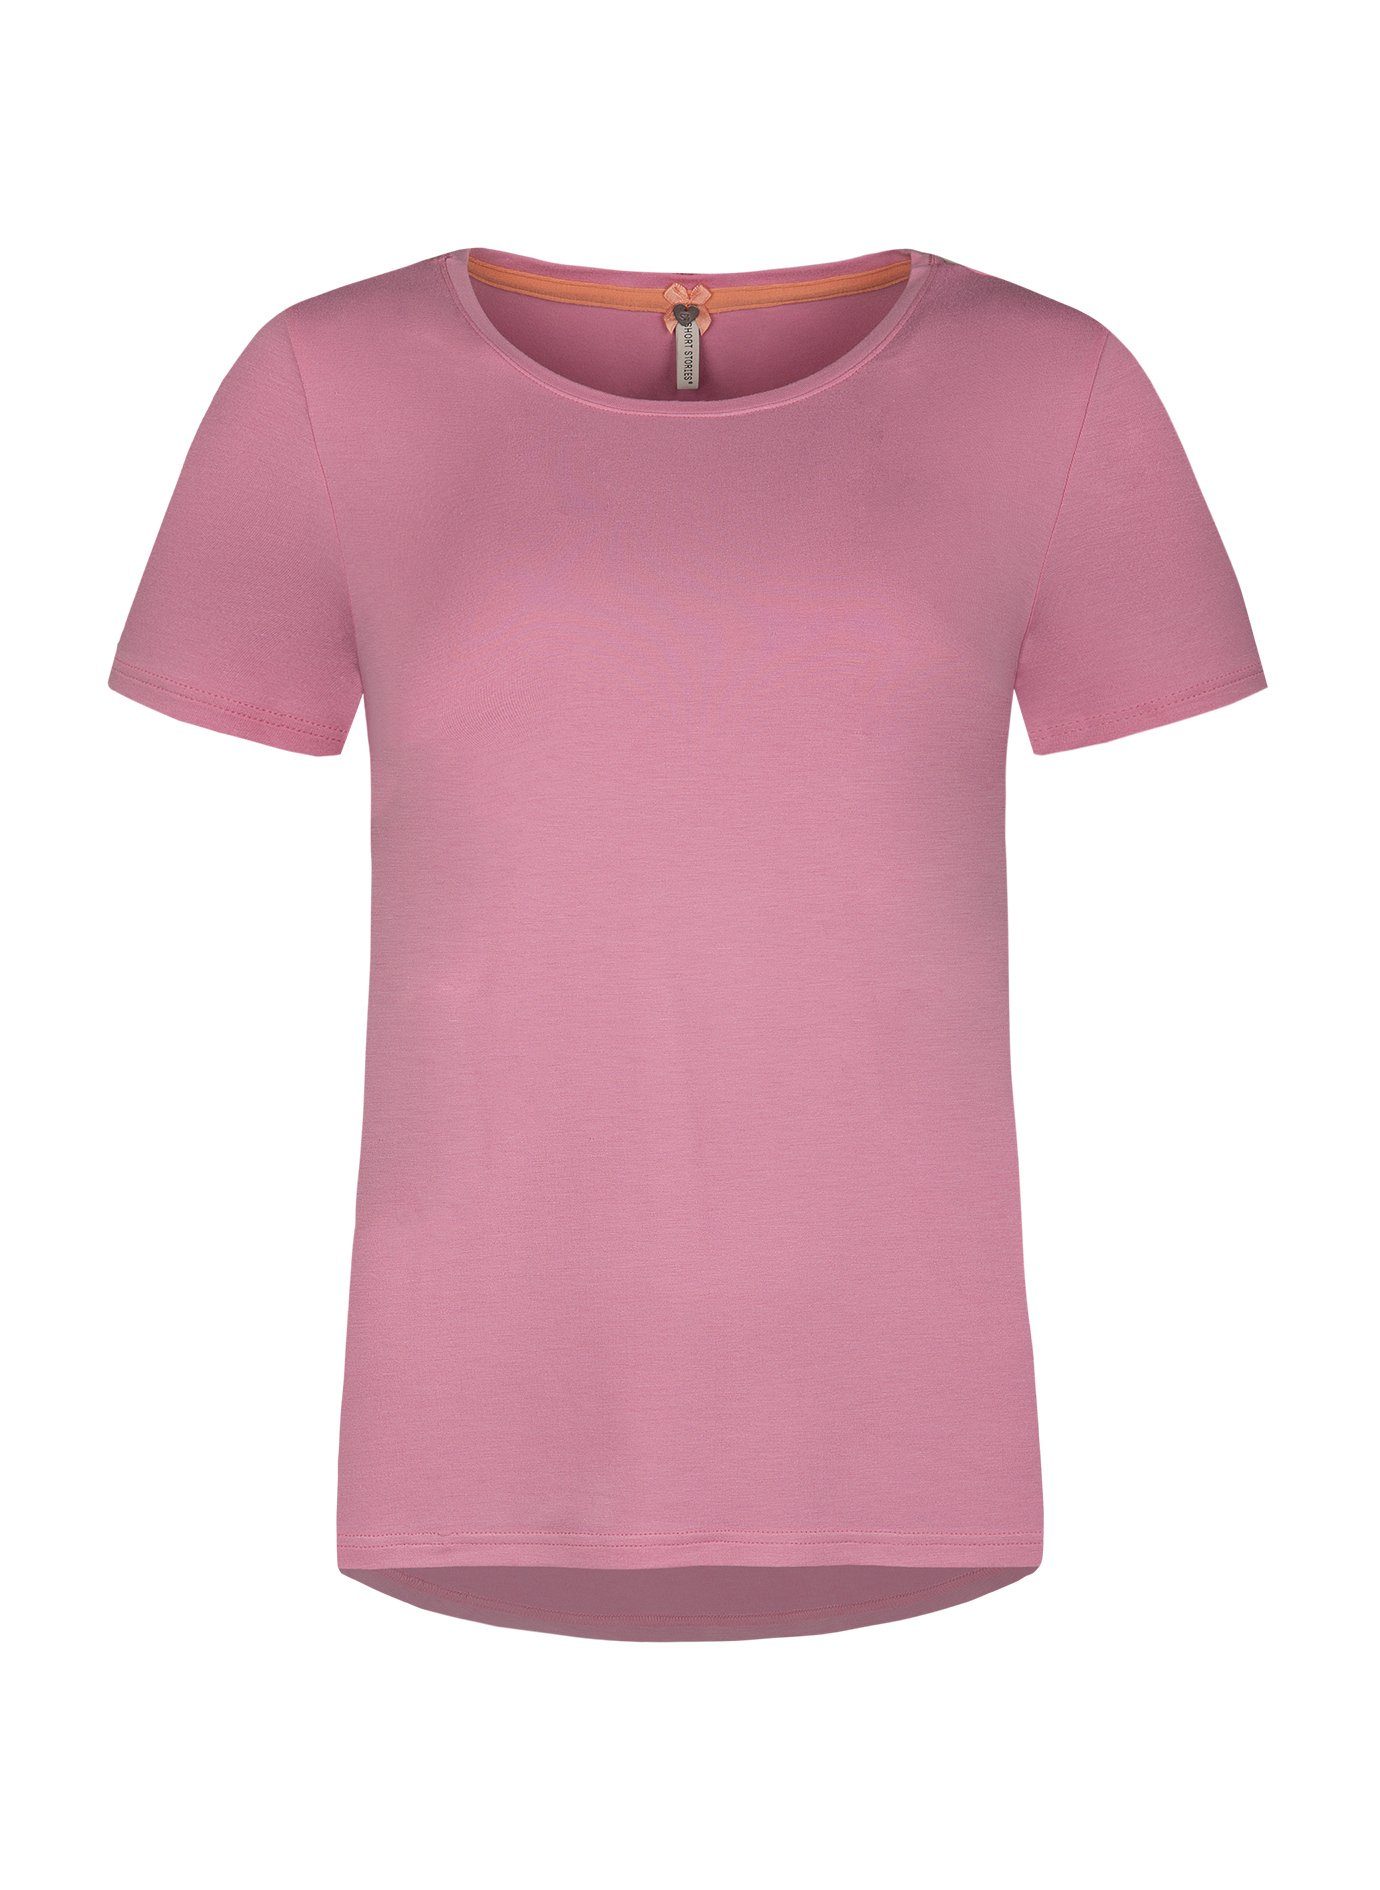 Short Stories Pyjamaoberteil soft 621334 pink STORIES Shirt SHORT